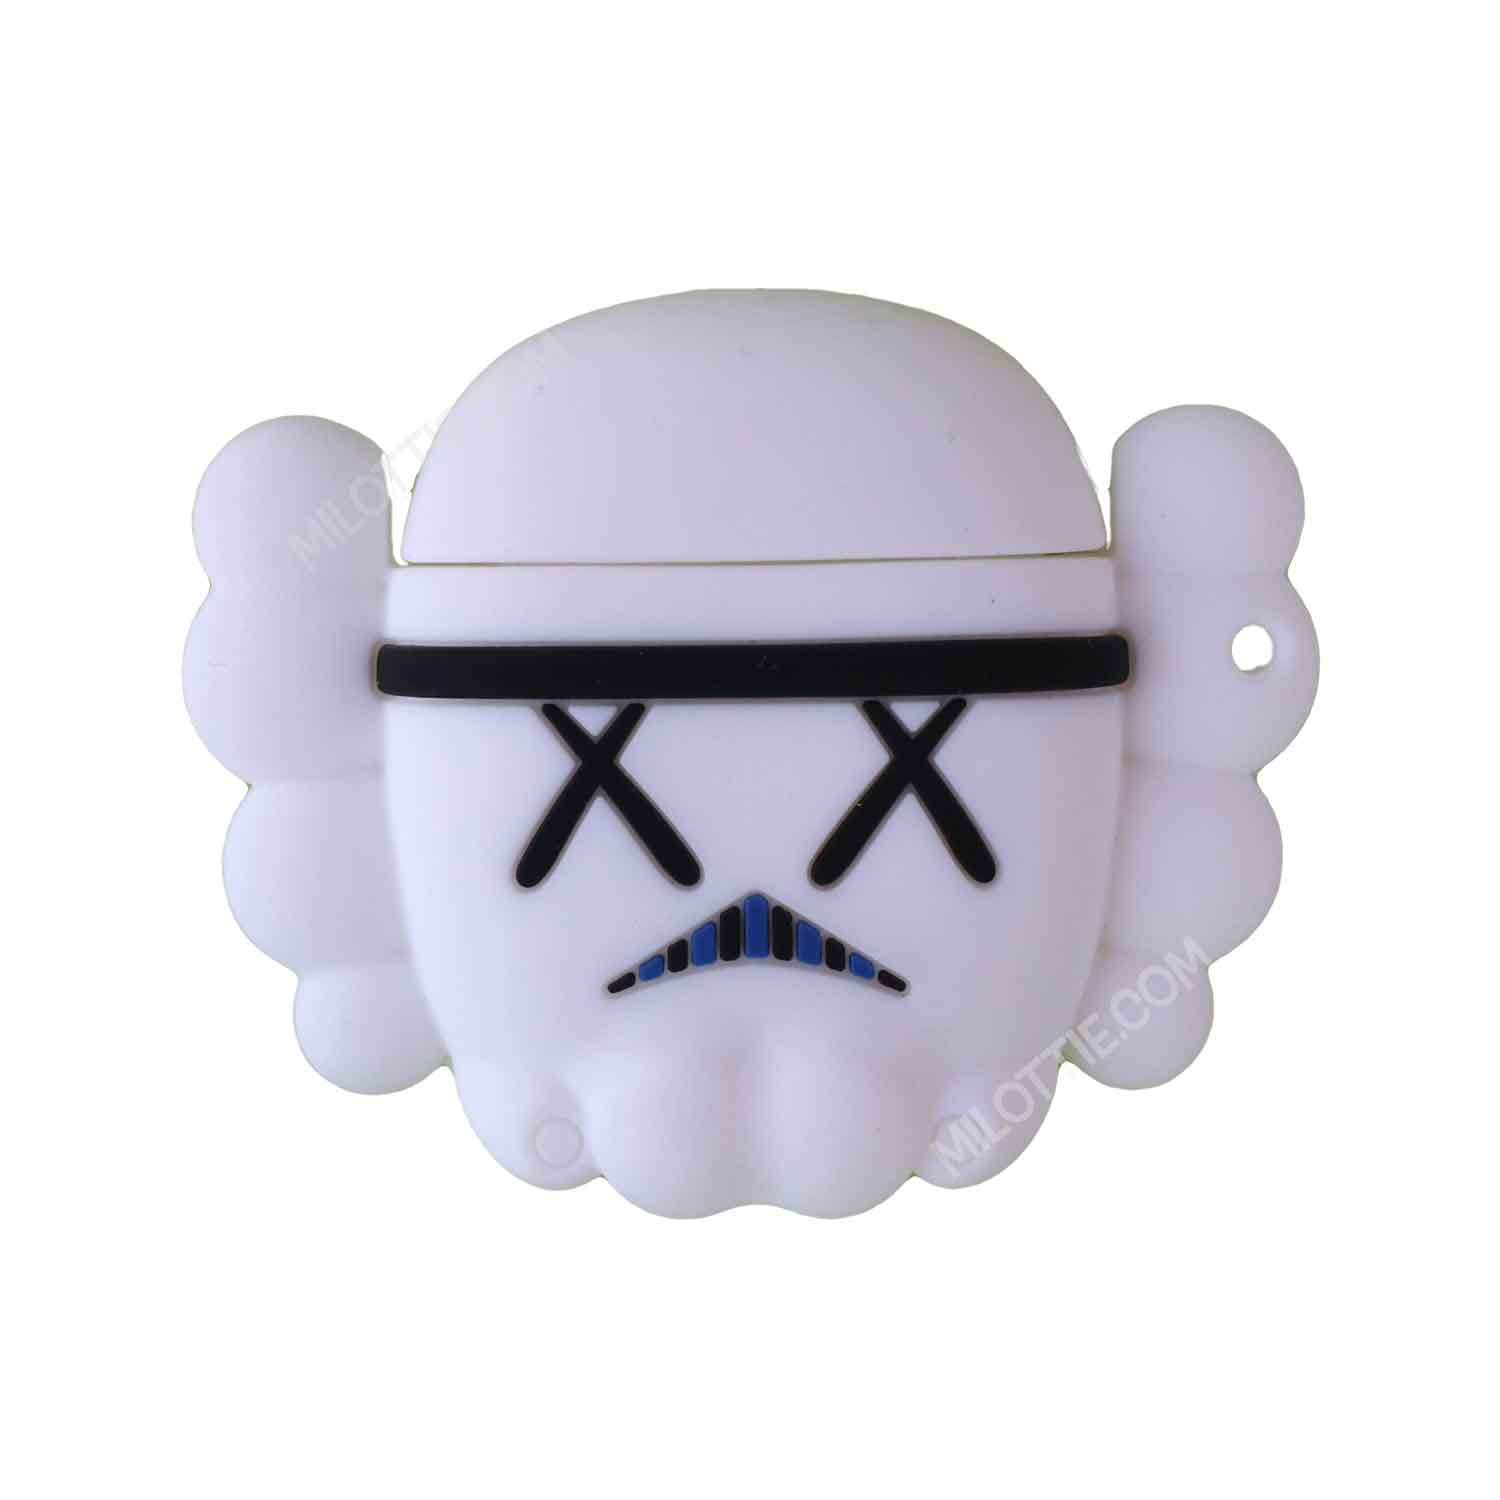 Kaws Storm Trooper Star Wars Apple Airpods Case